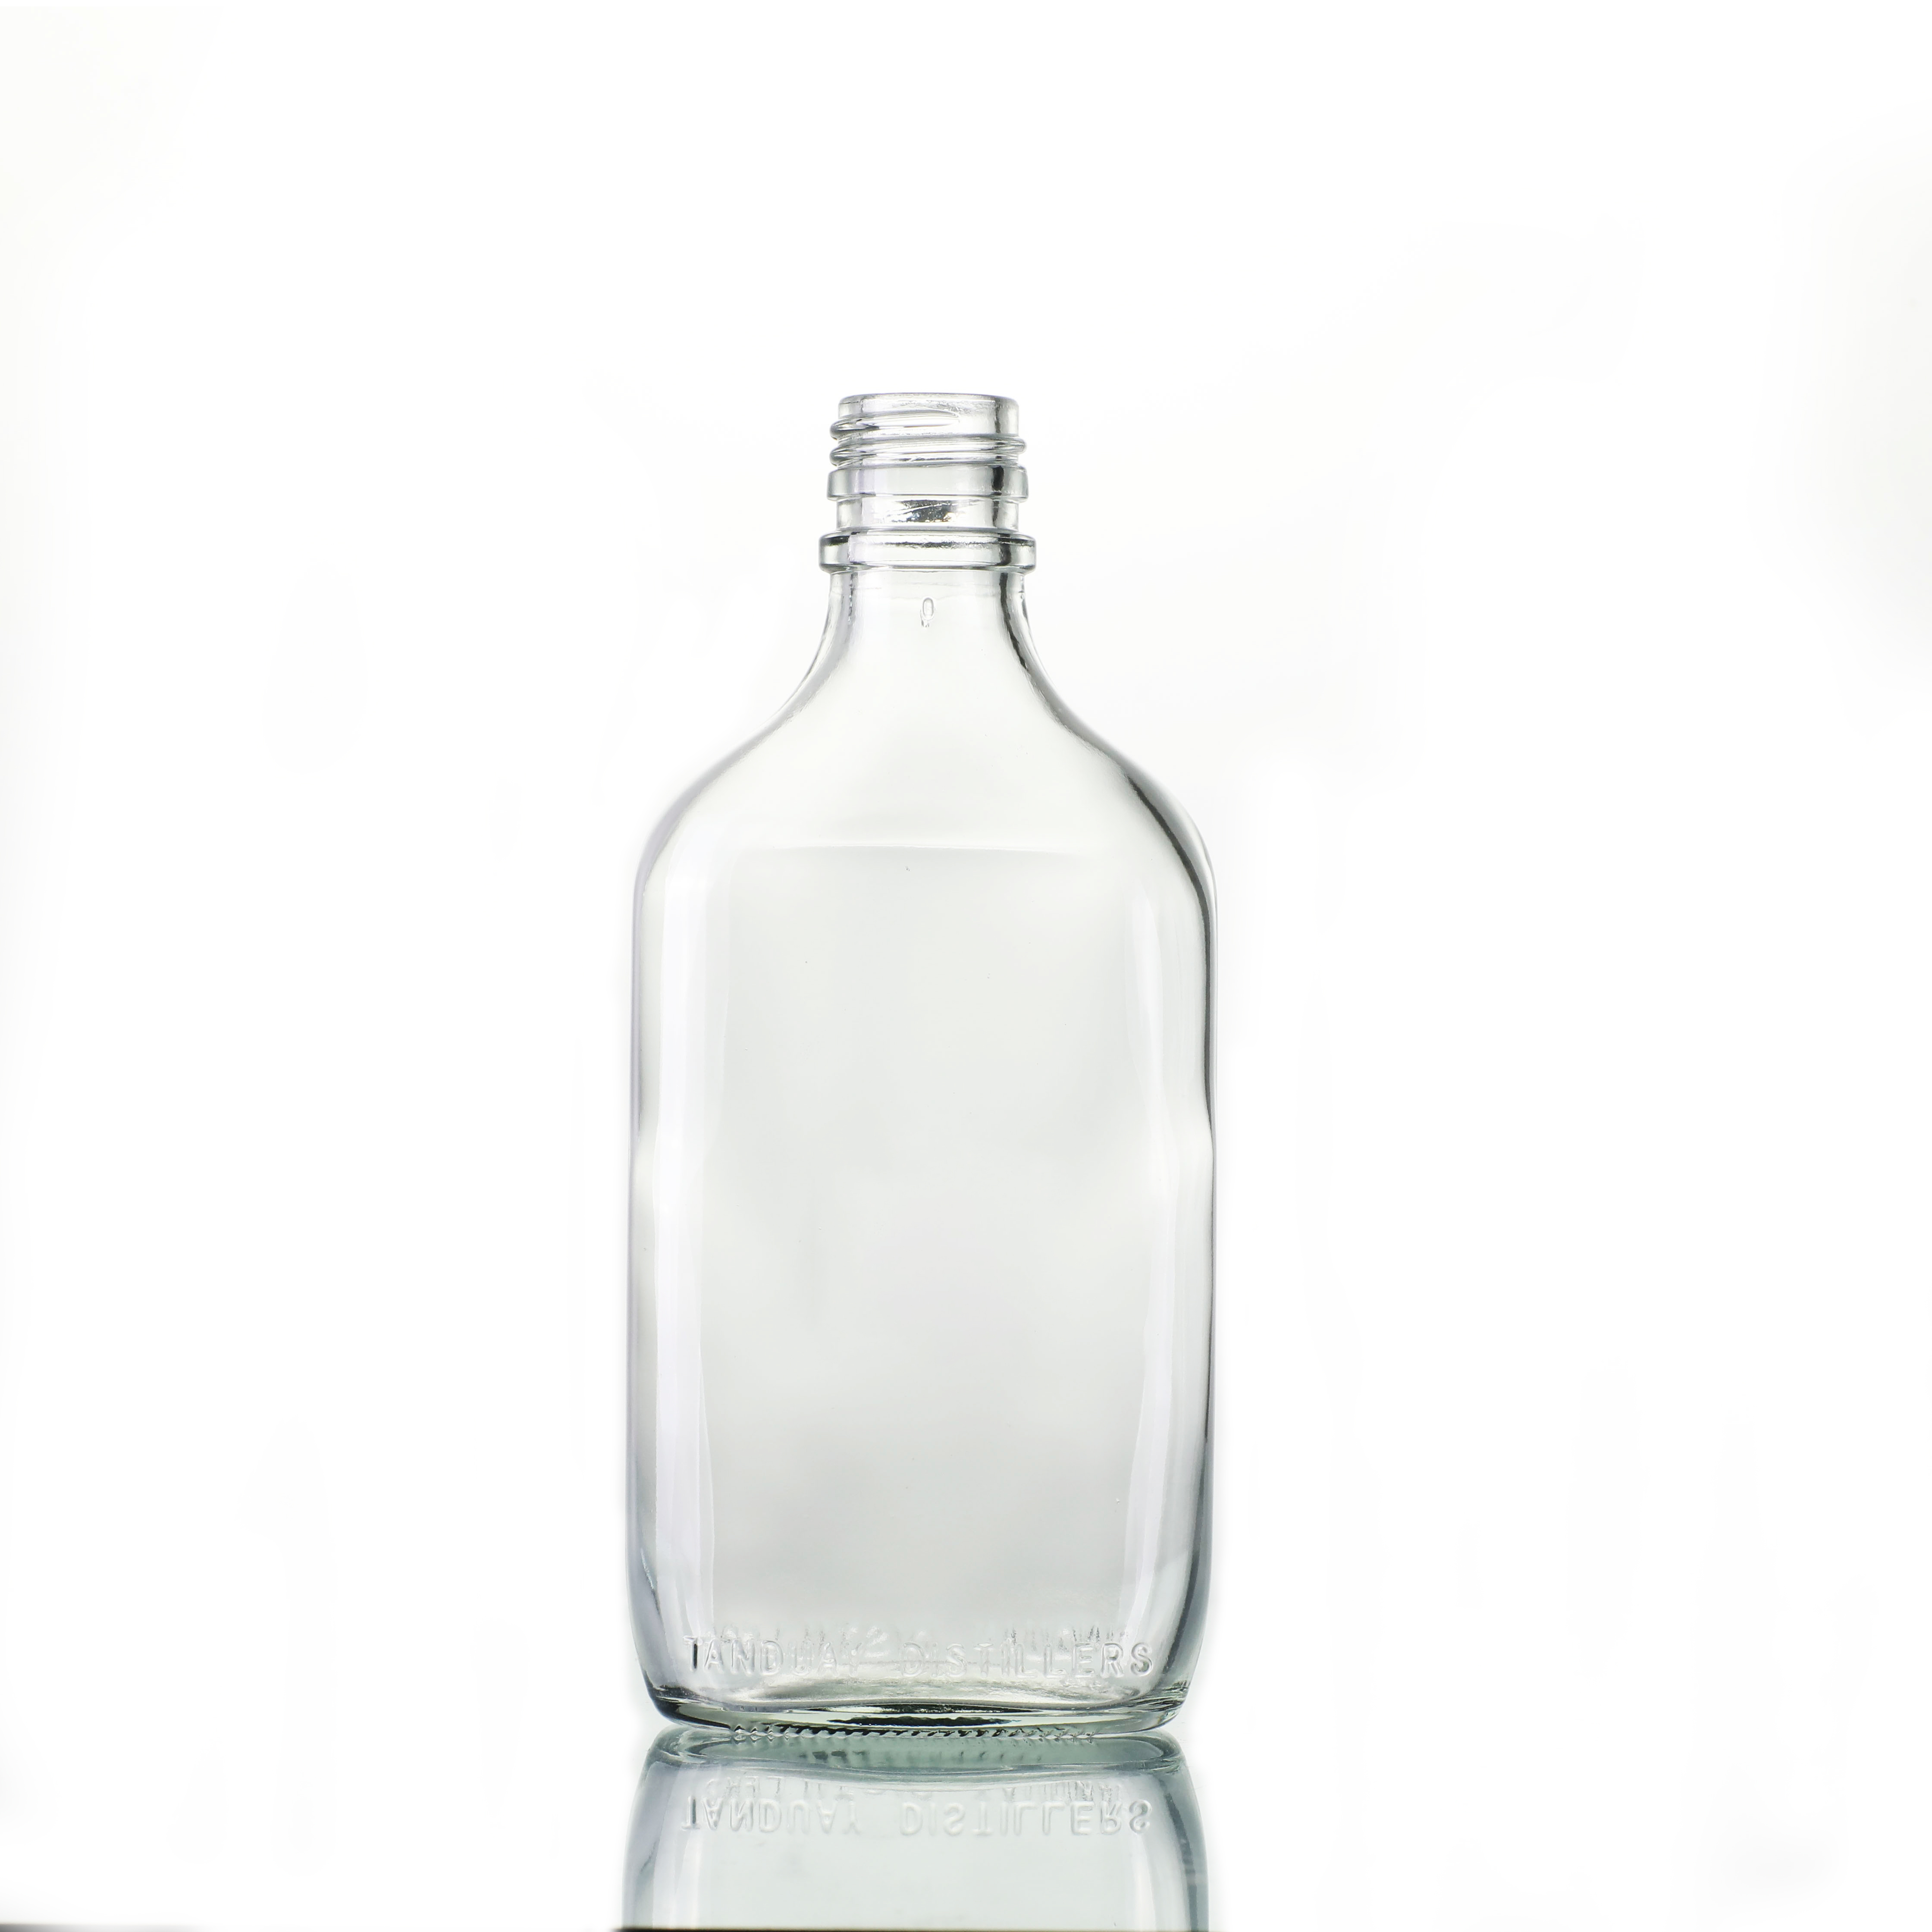 One of Hottest for Unique Shaped Whisky Liquor Bottle - 375ml flat flask liquor bottle – Ant Glass